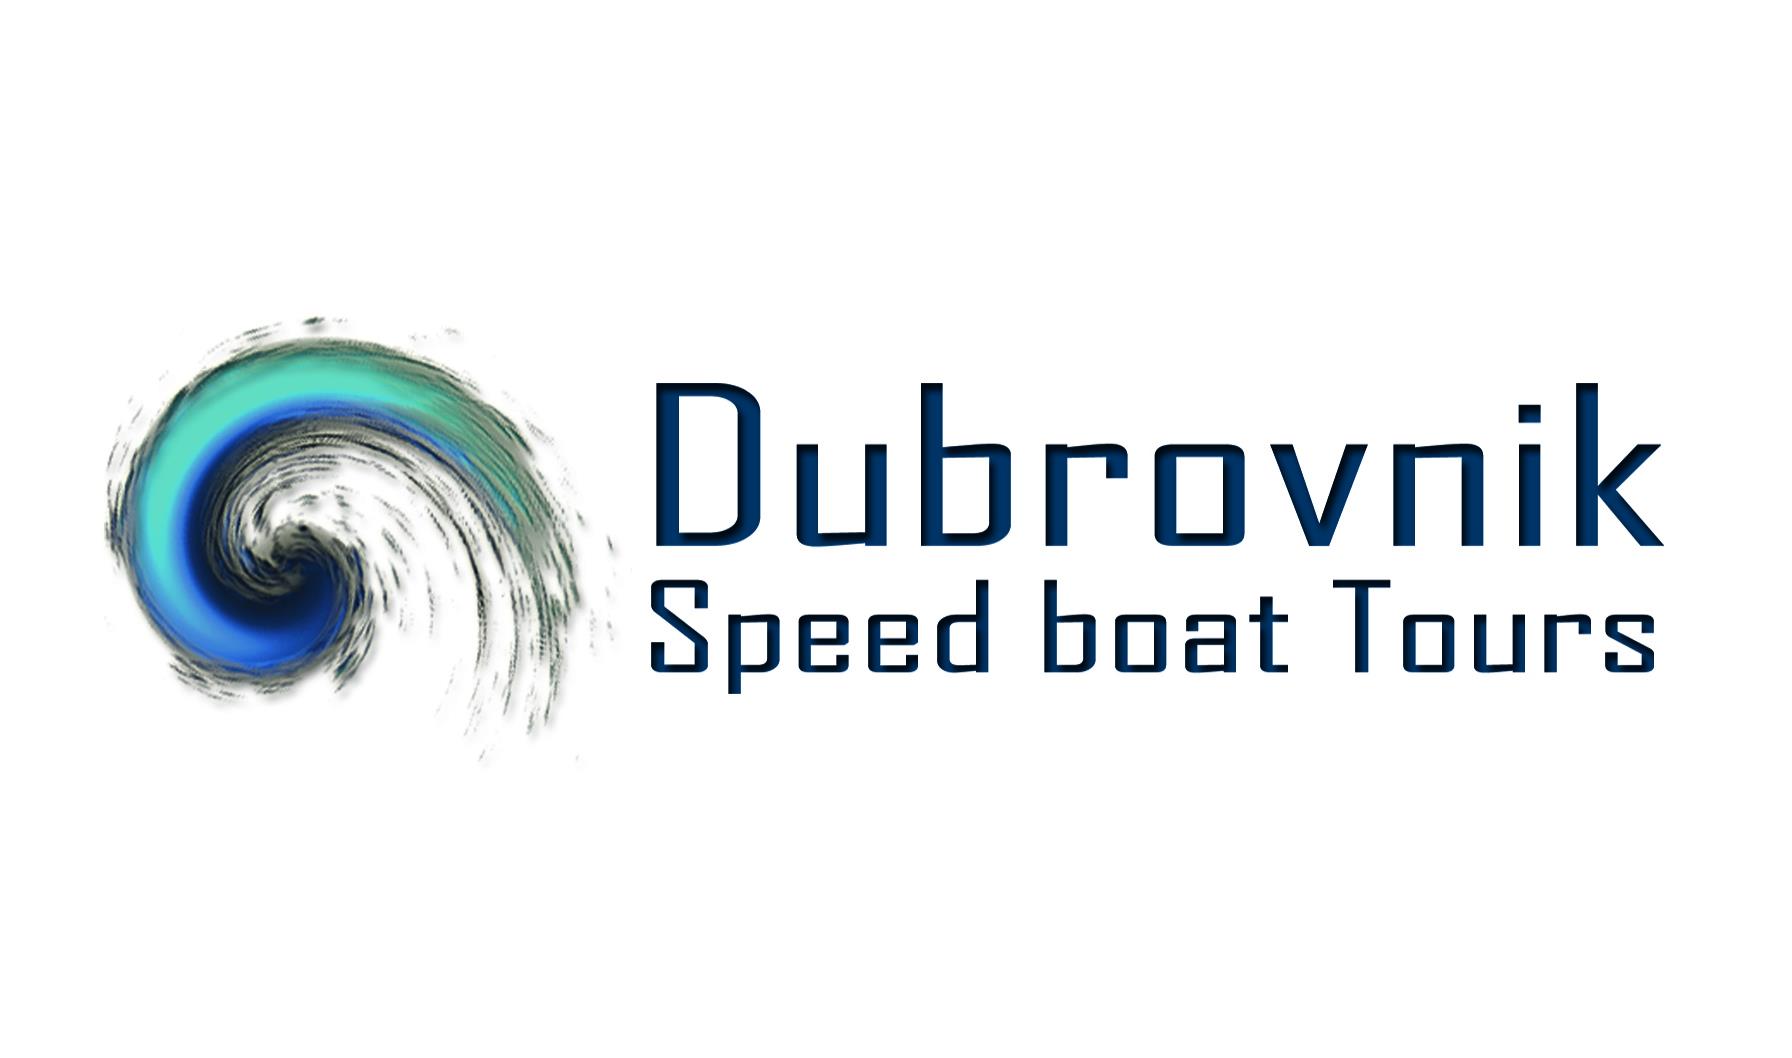 Dubrovnik Speed boat Tours